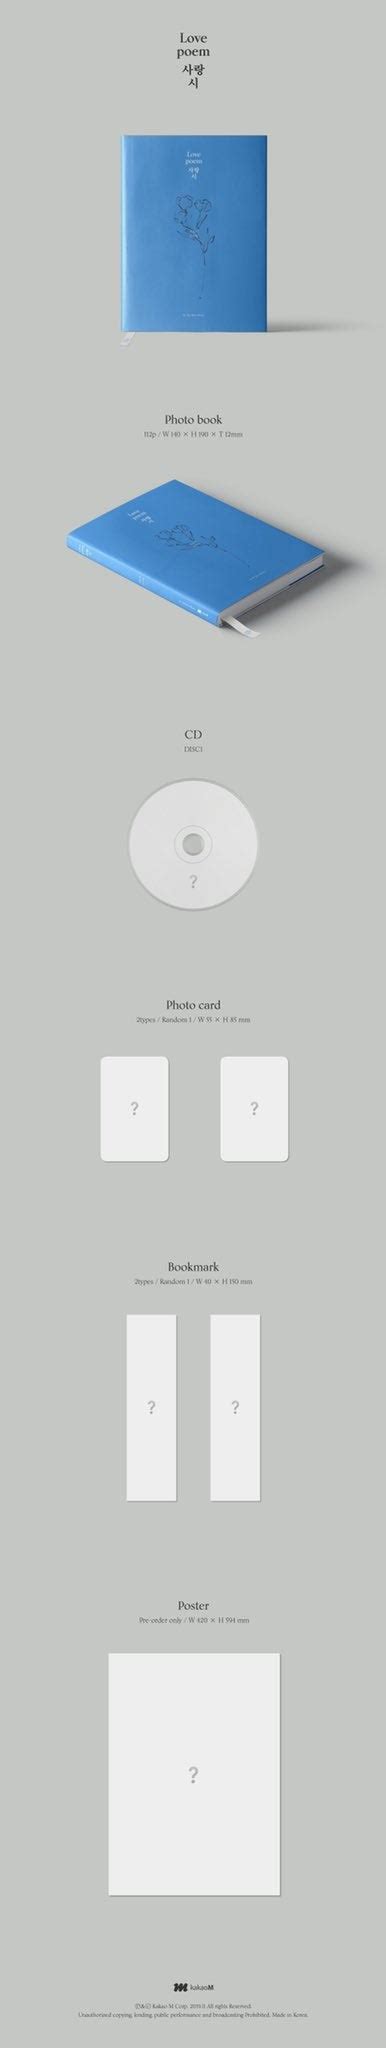 Iu 5th album 'lilac' hilac & bylac versionsscans. IU - Love poem (Album Packaging Preview) : kpop